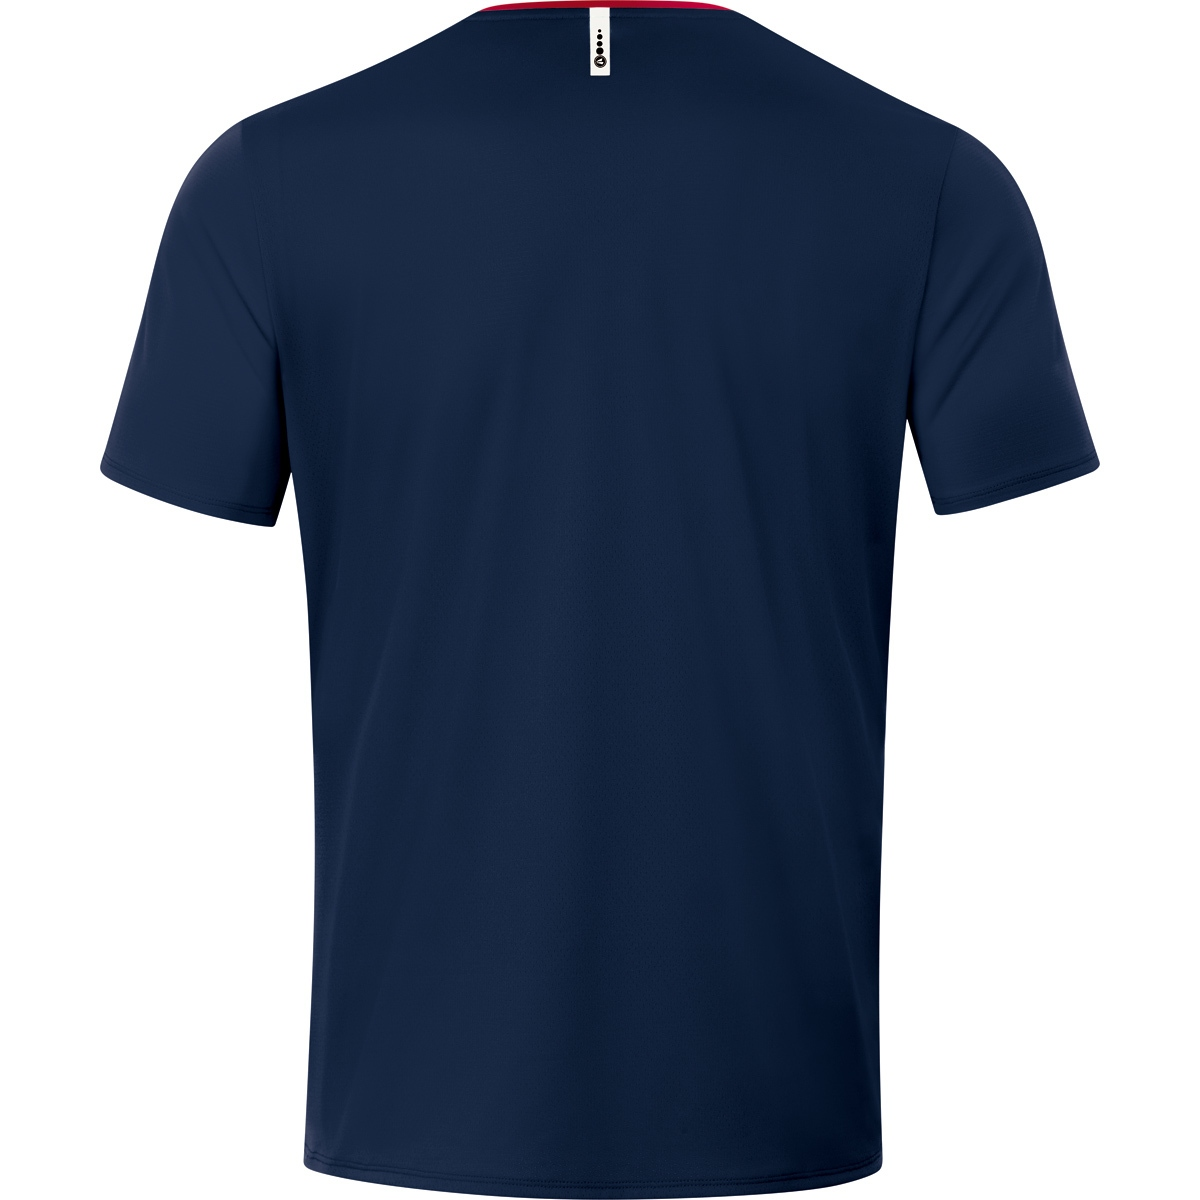 2.0 Gr. Champ T-Shirt M, 6120 Herren, JAKO rot, marine/chili